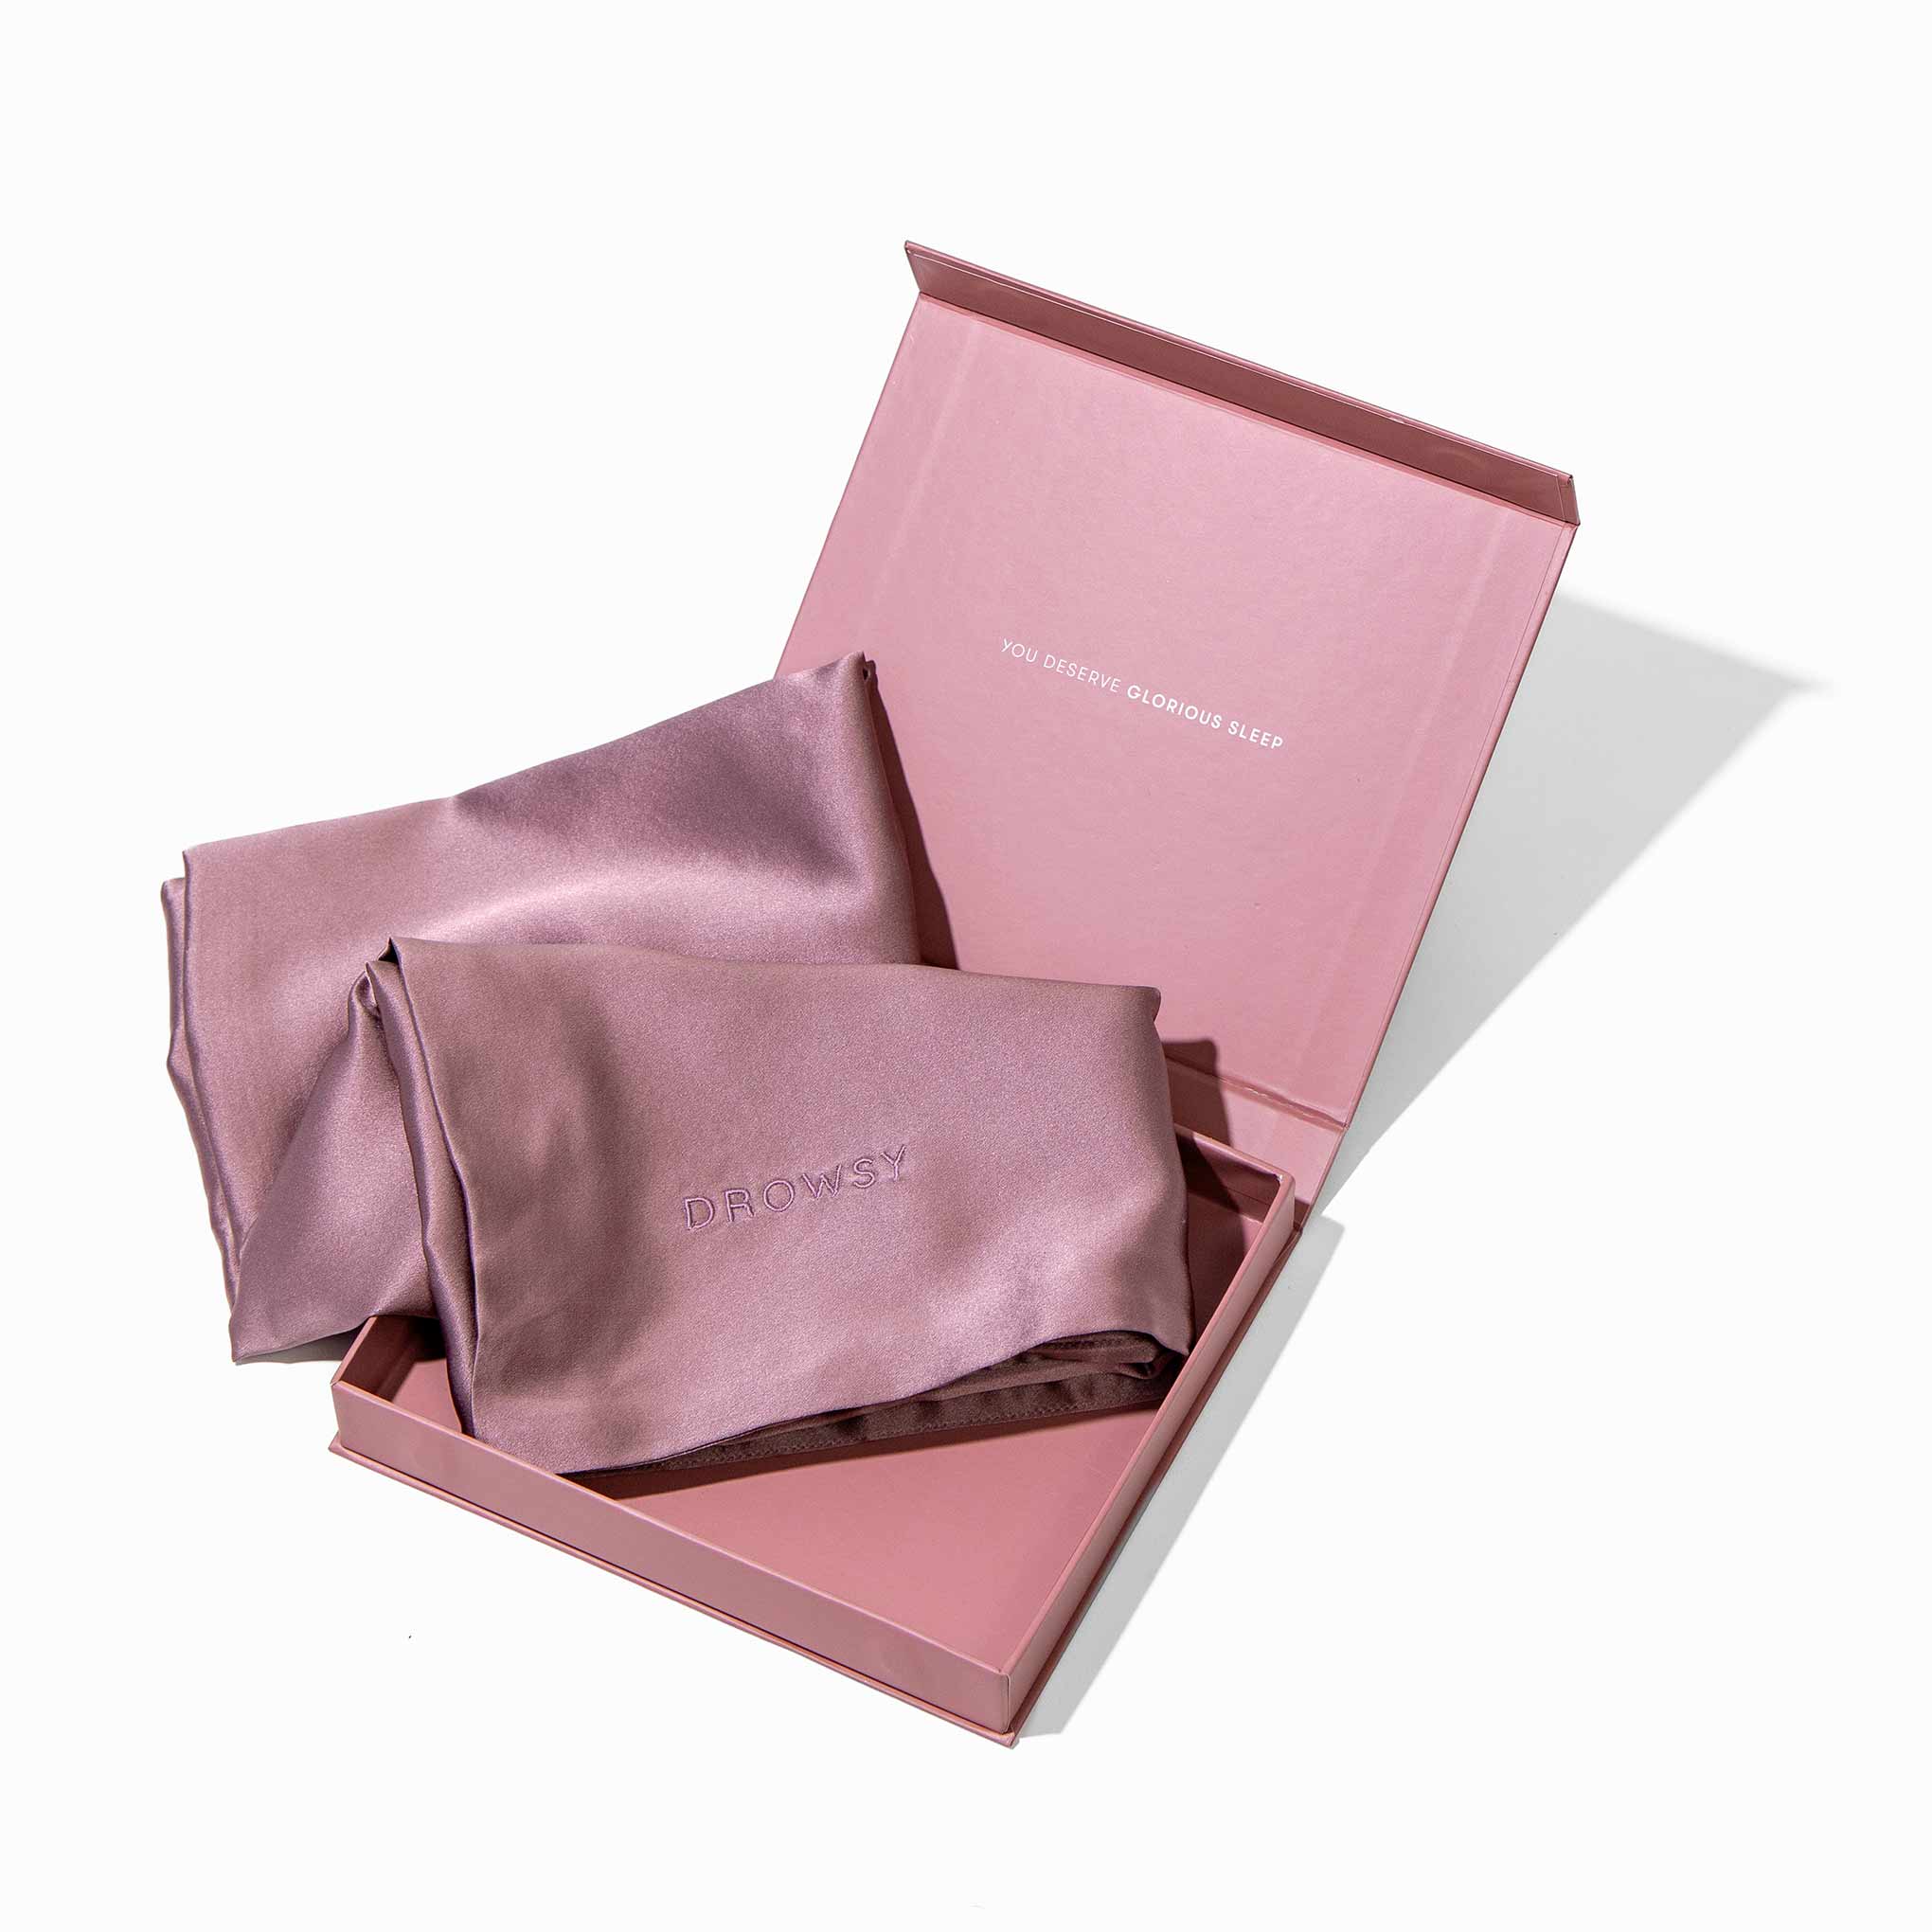 Pink pillowcase box opening with pink silk pillowcase inside